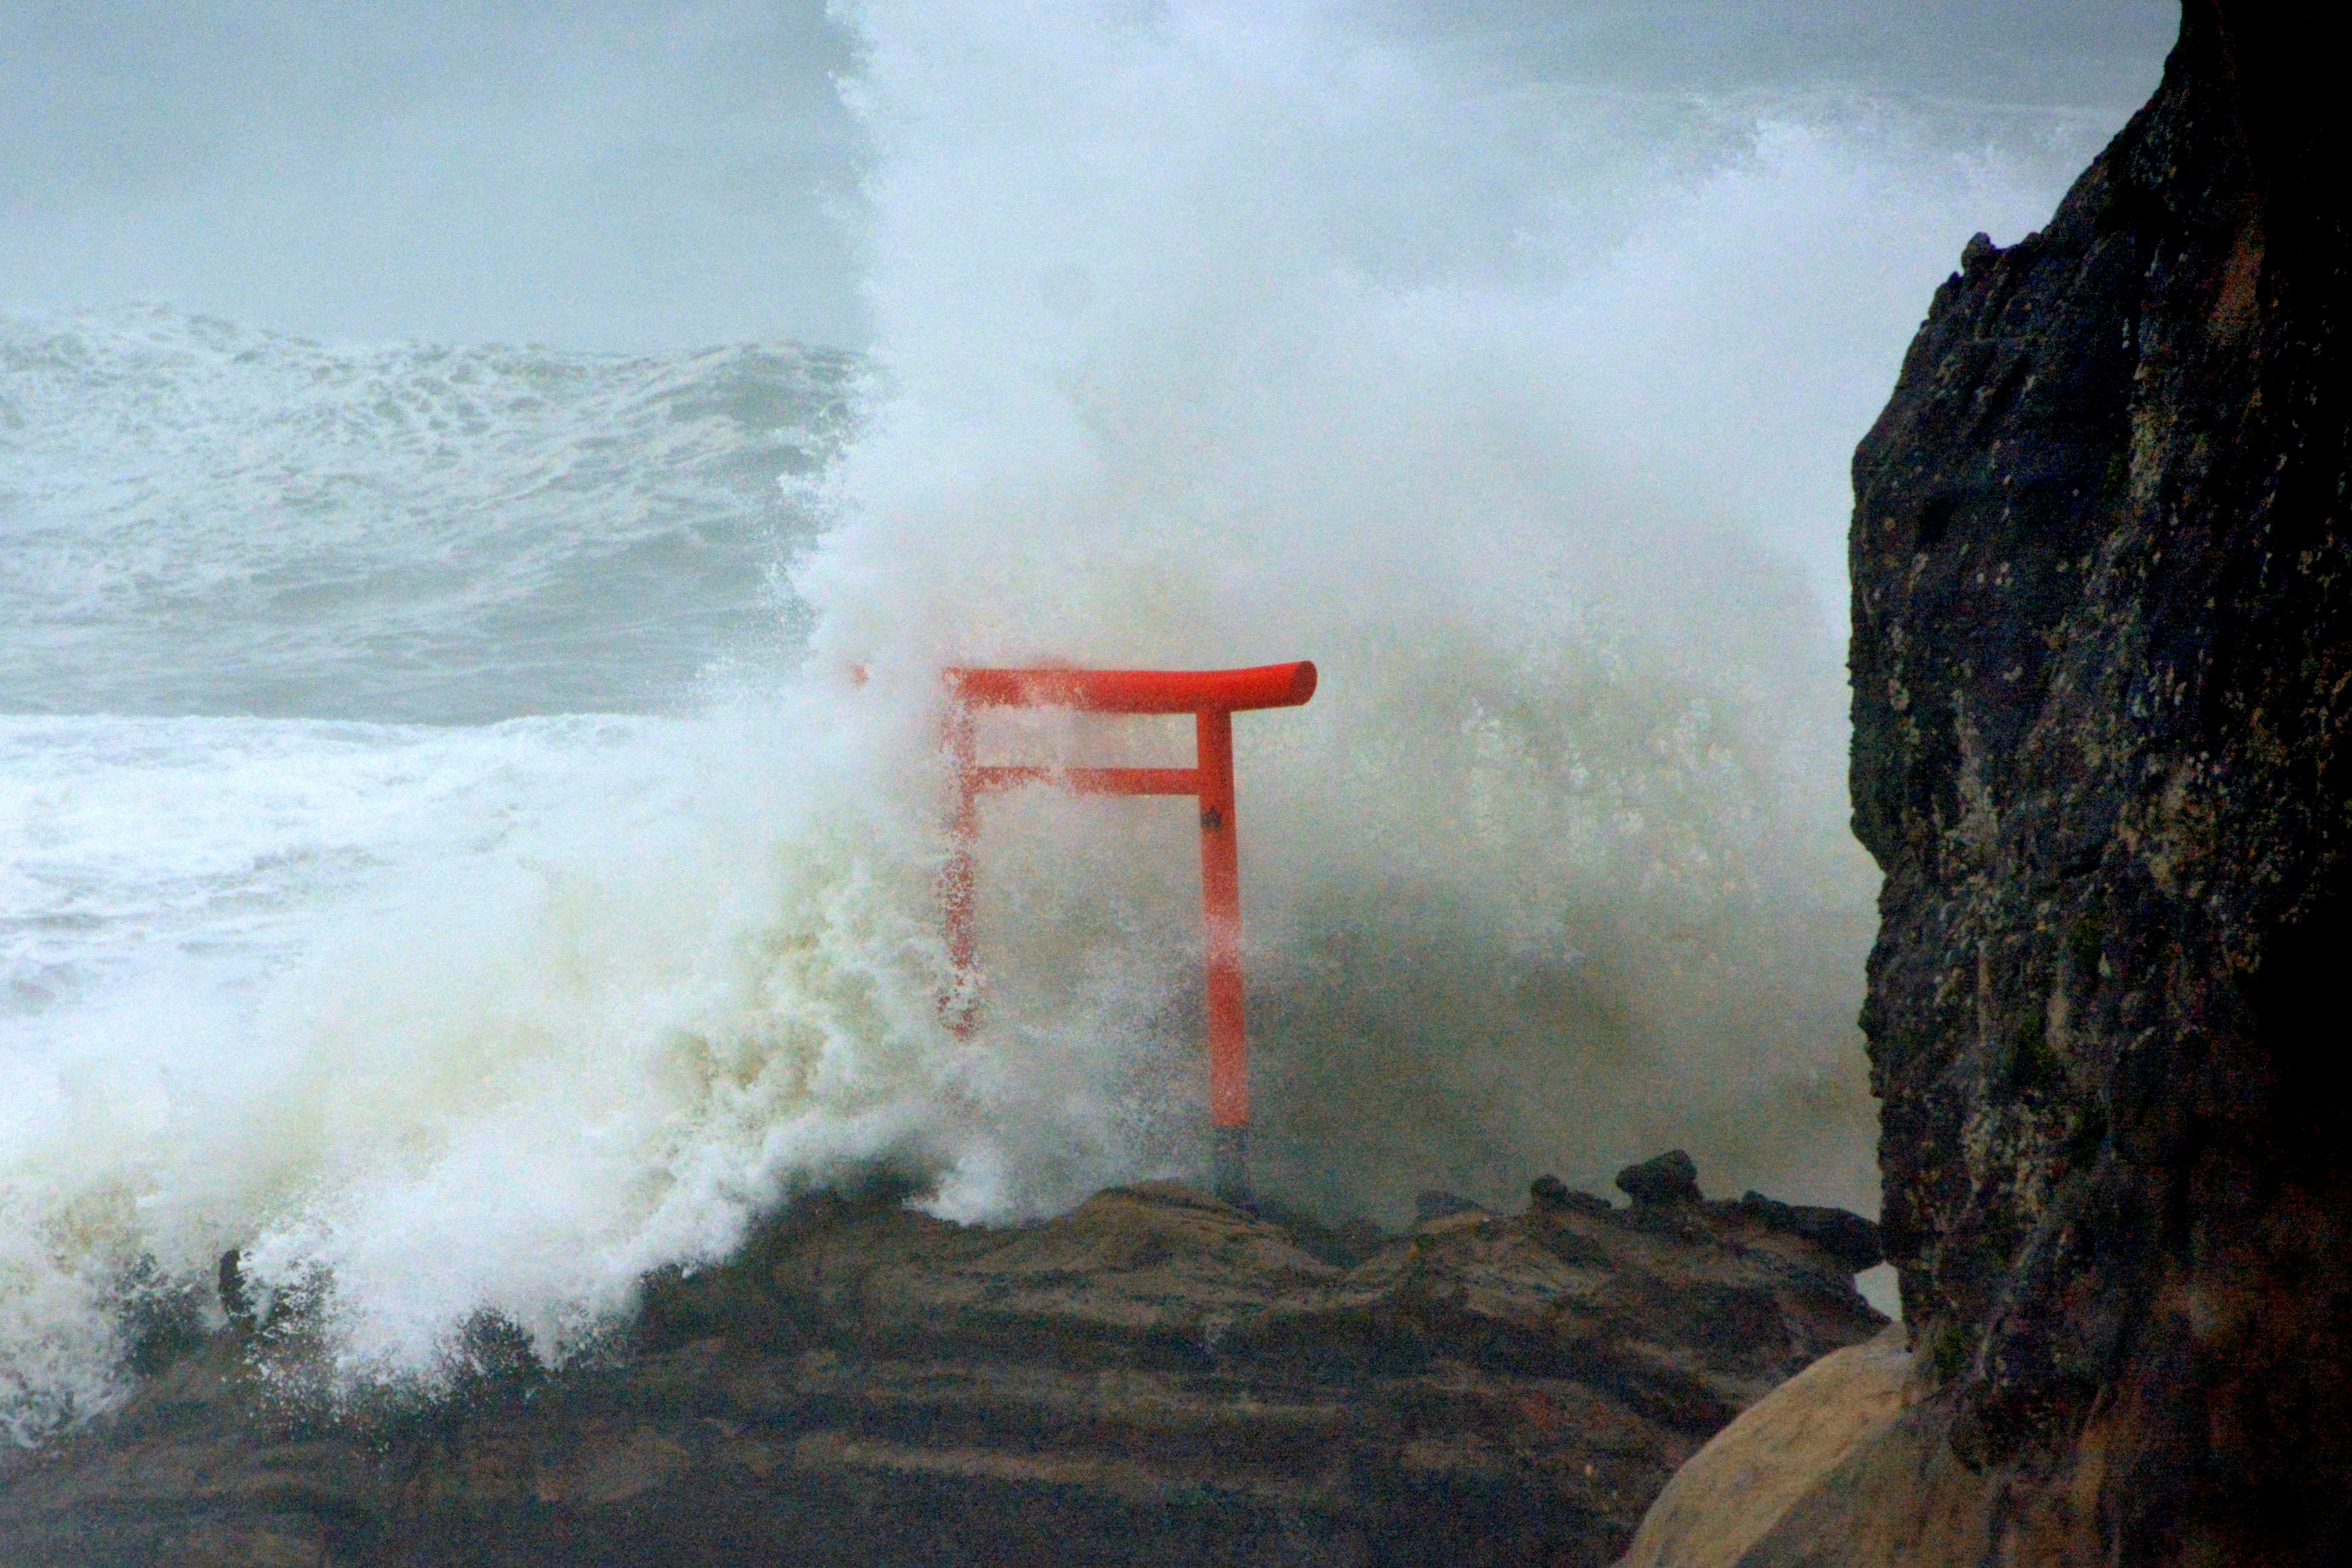 Typhoon Lionrock nears Japan's tsunami-hit northeast, grounds flights